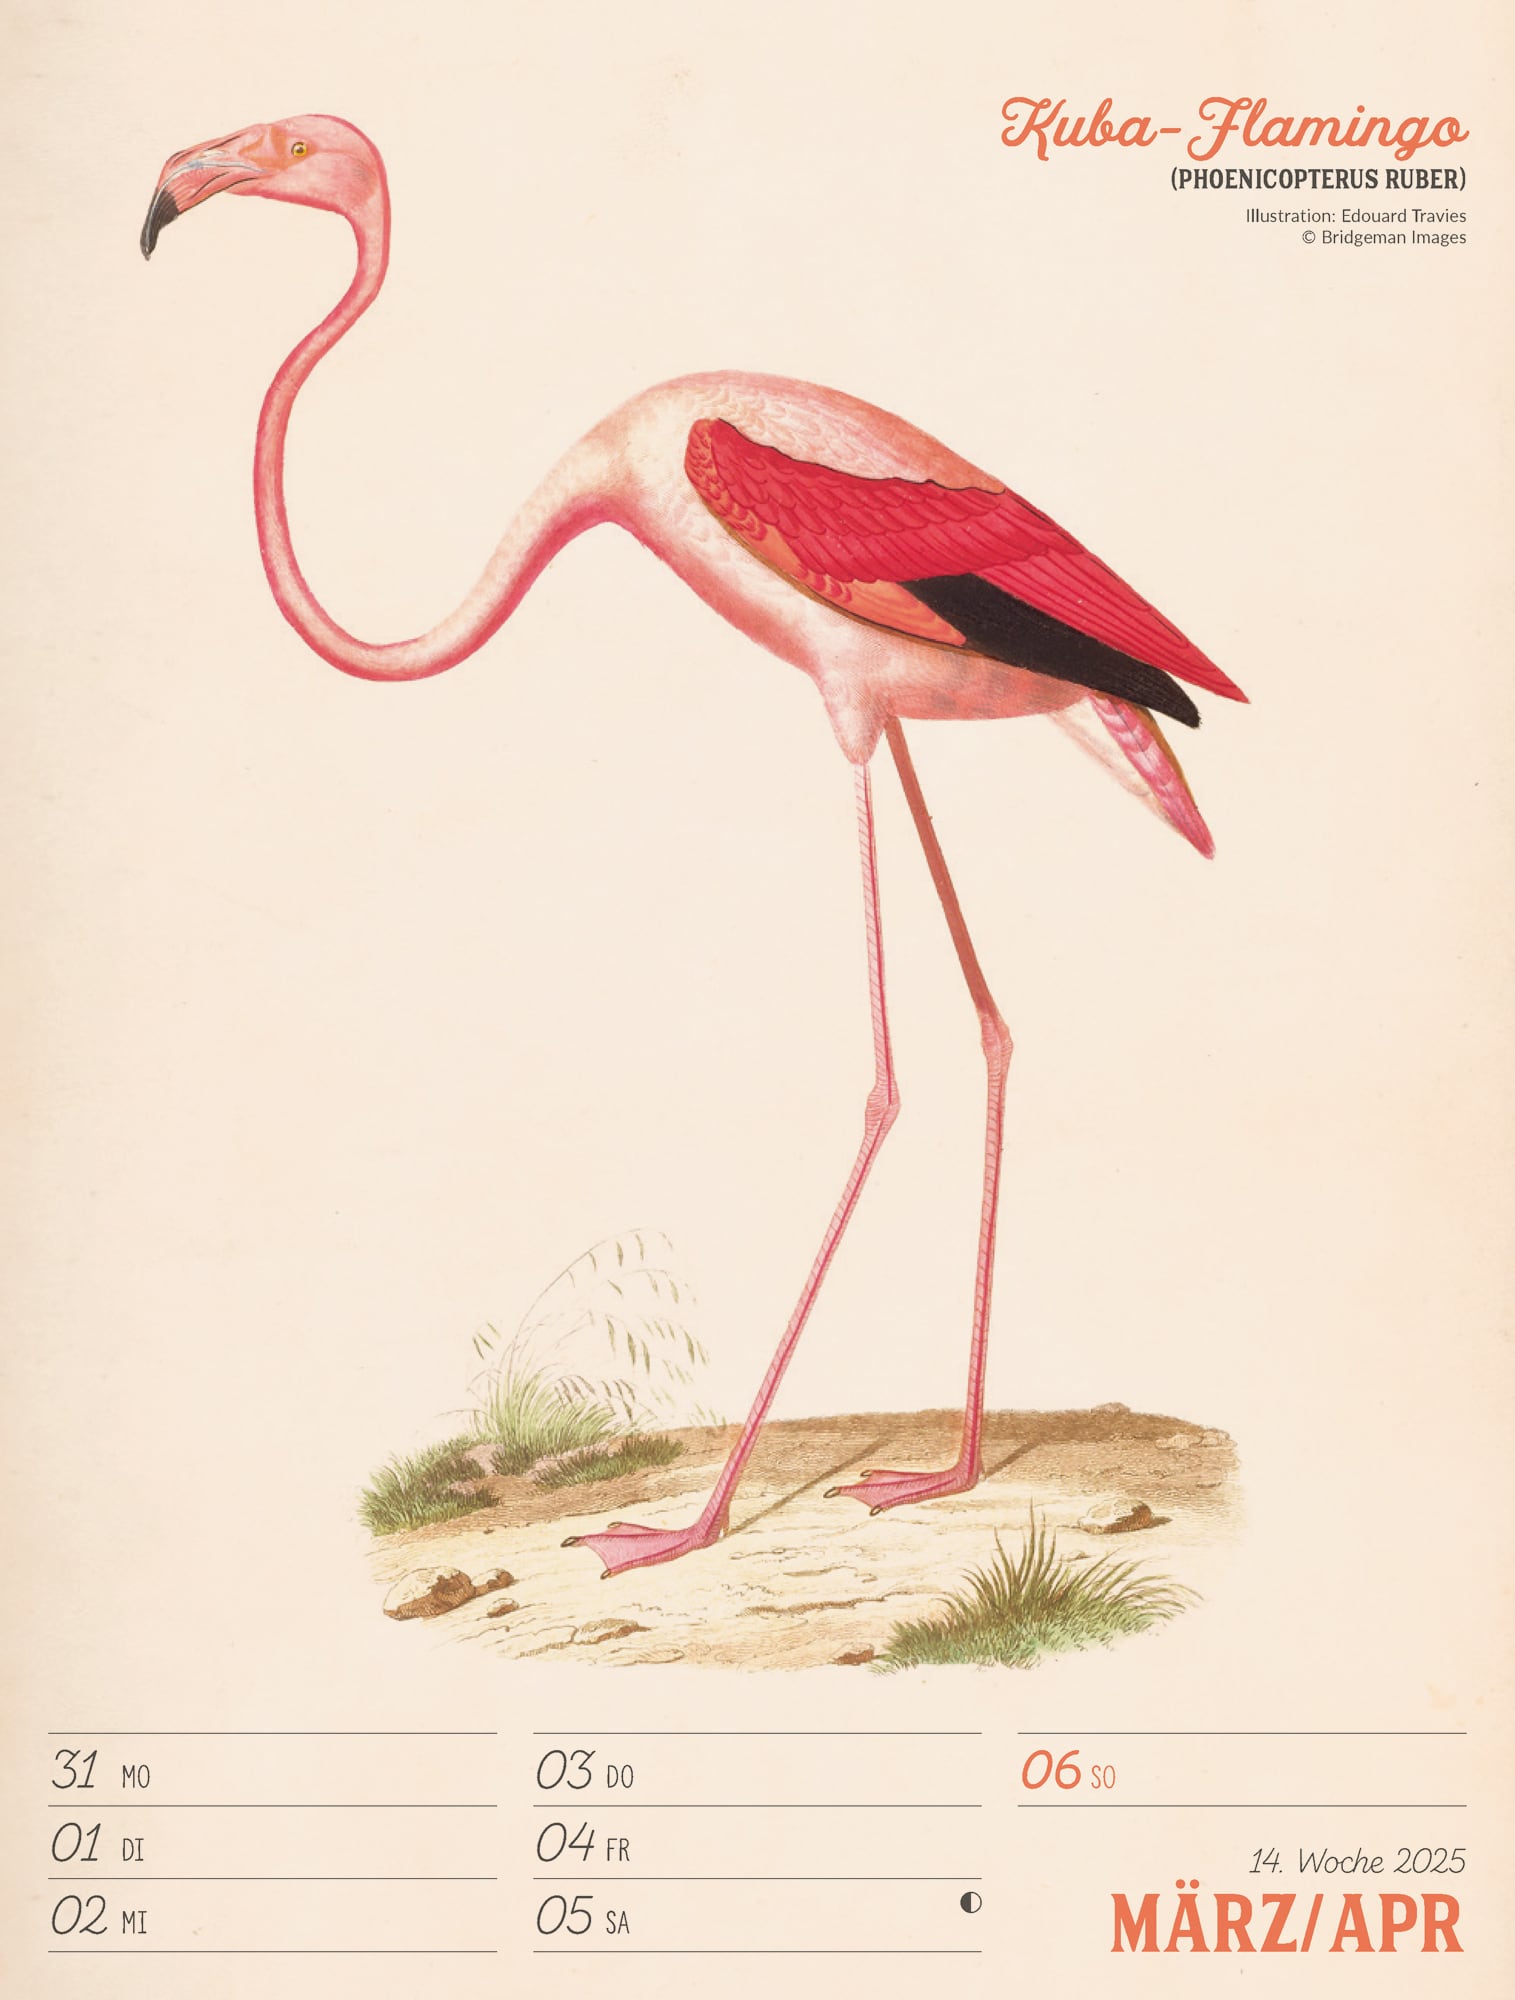 Ackermann Calendar The wonderful World of Birds 2025 - Weekly Planner - Inside View 17